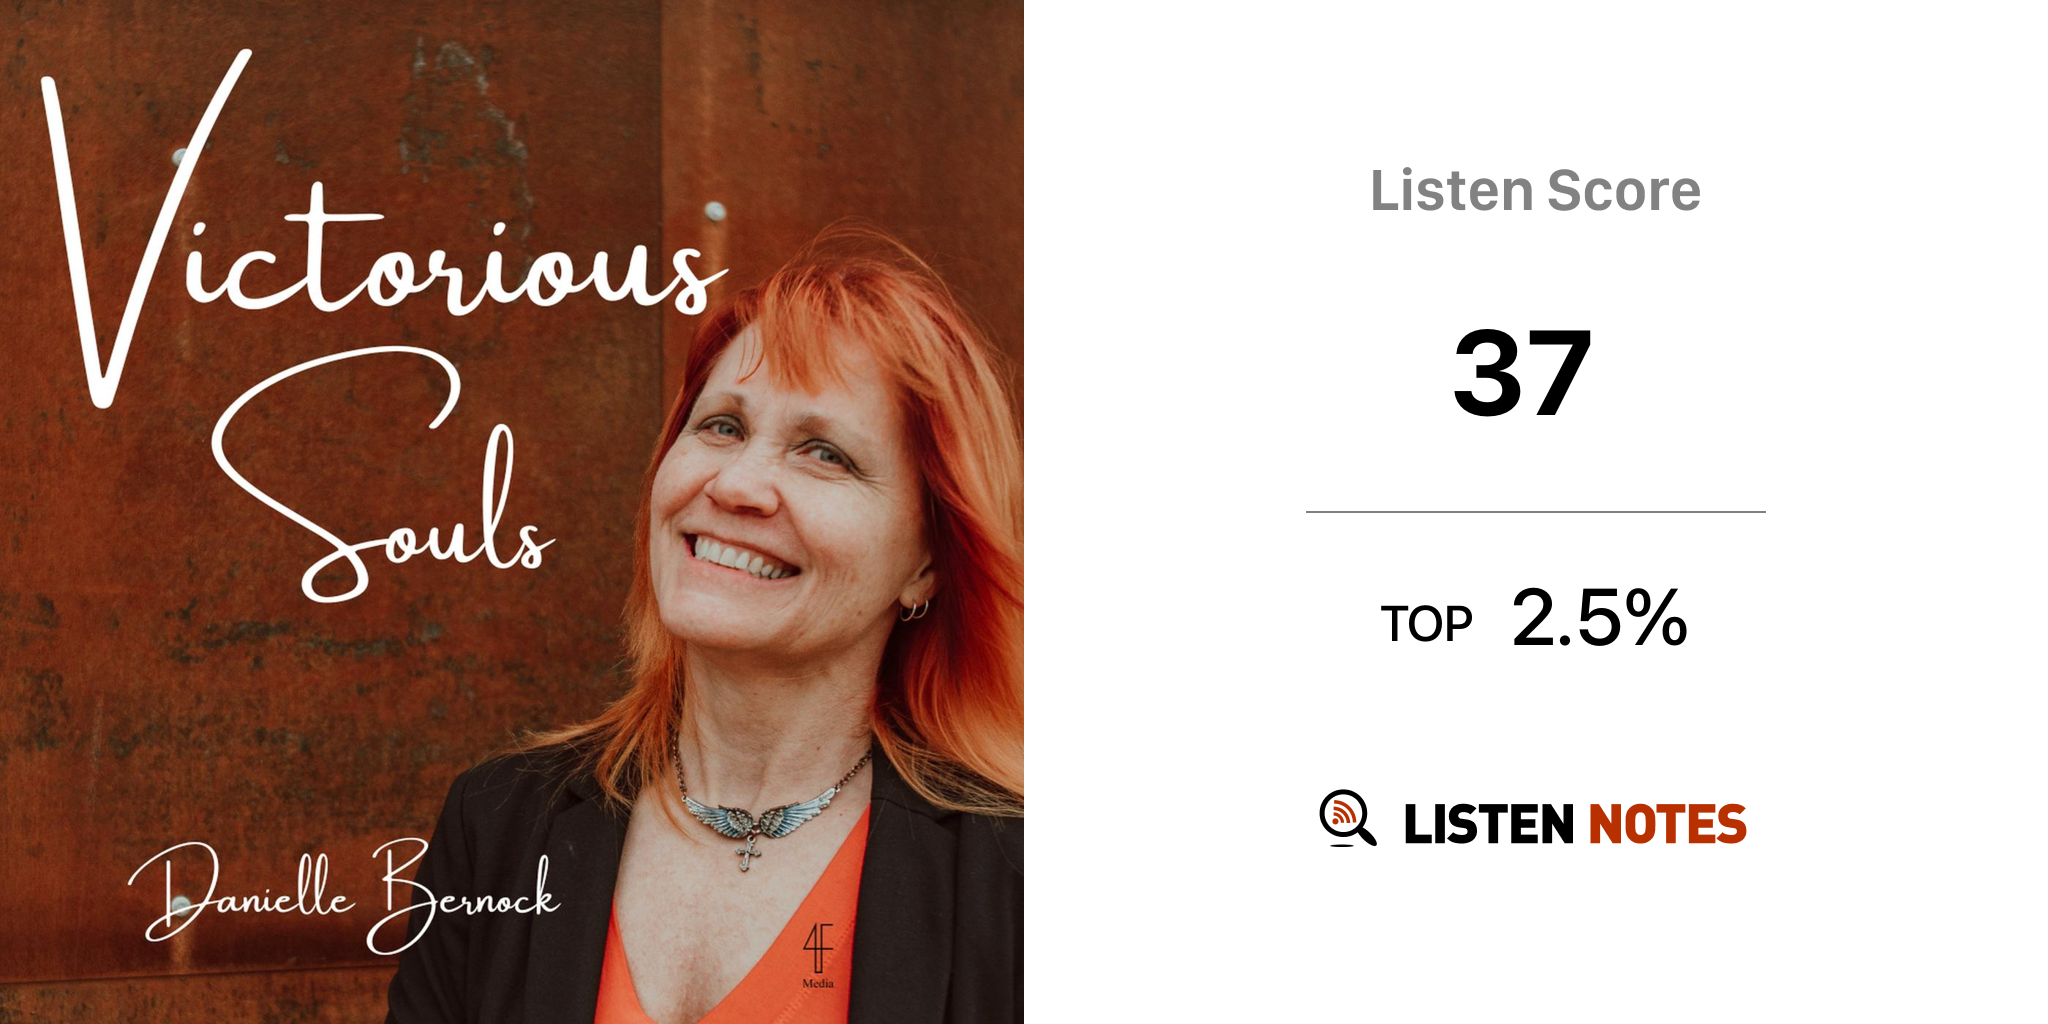 Victorious Souls Podcast Danielle Bernock Listen Notes